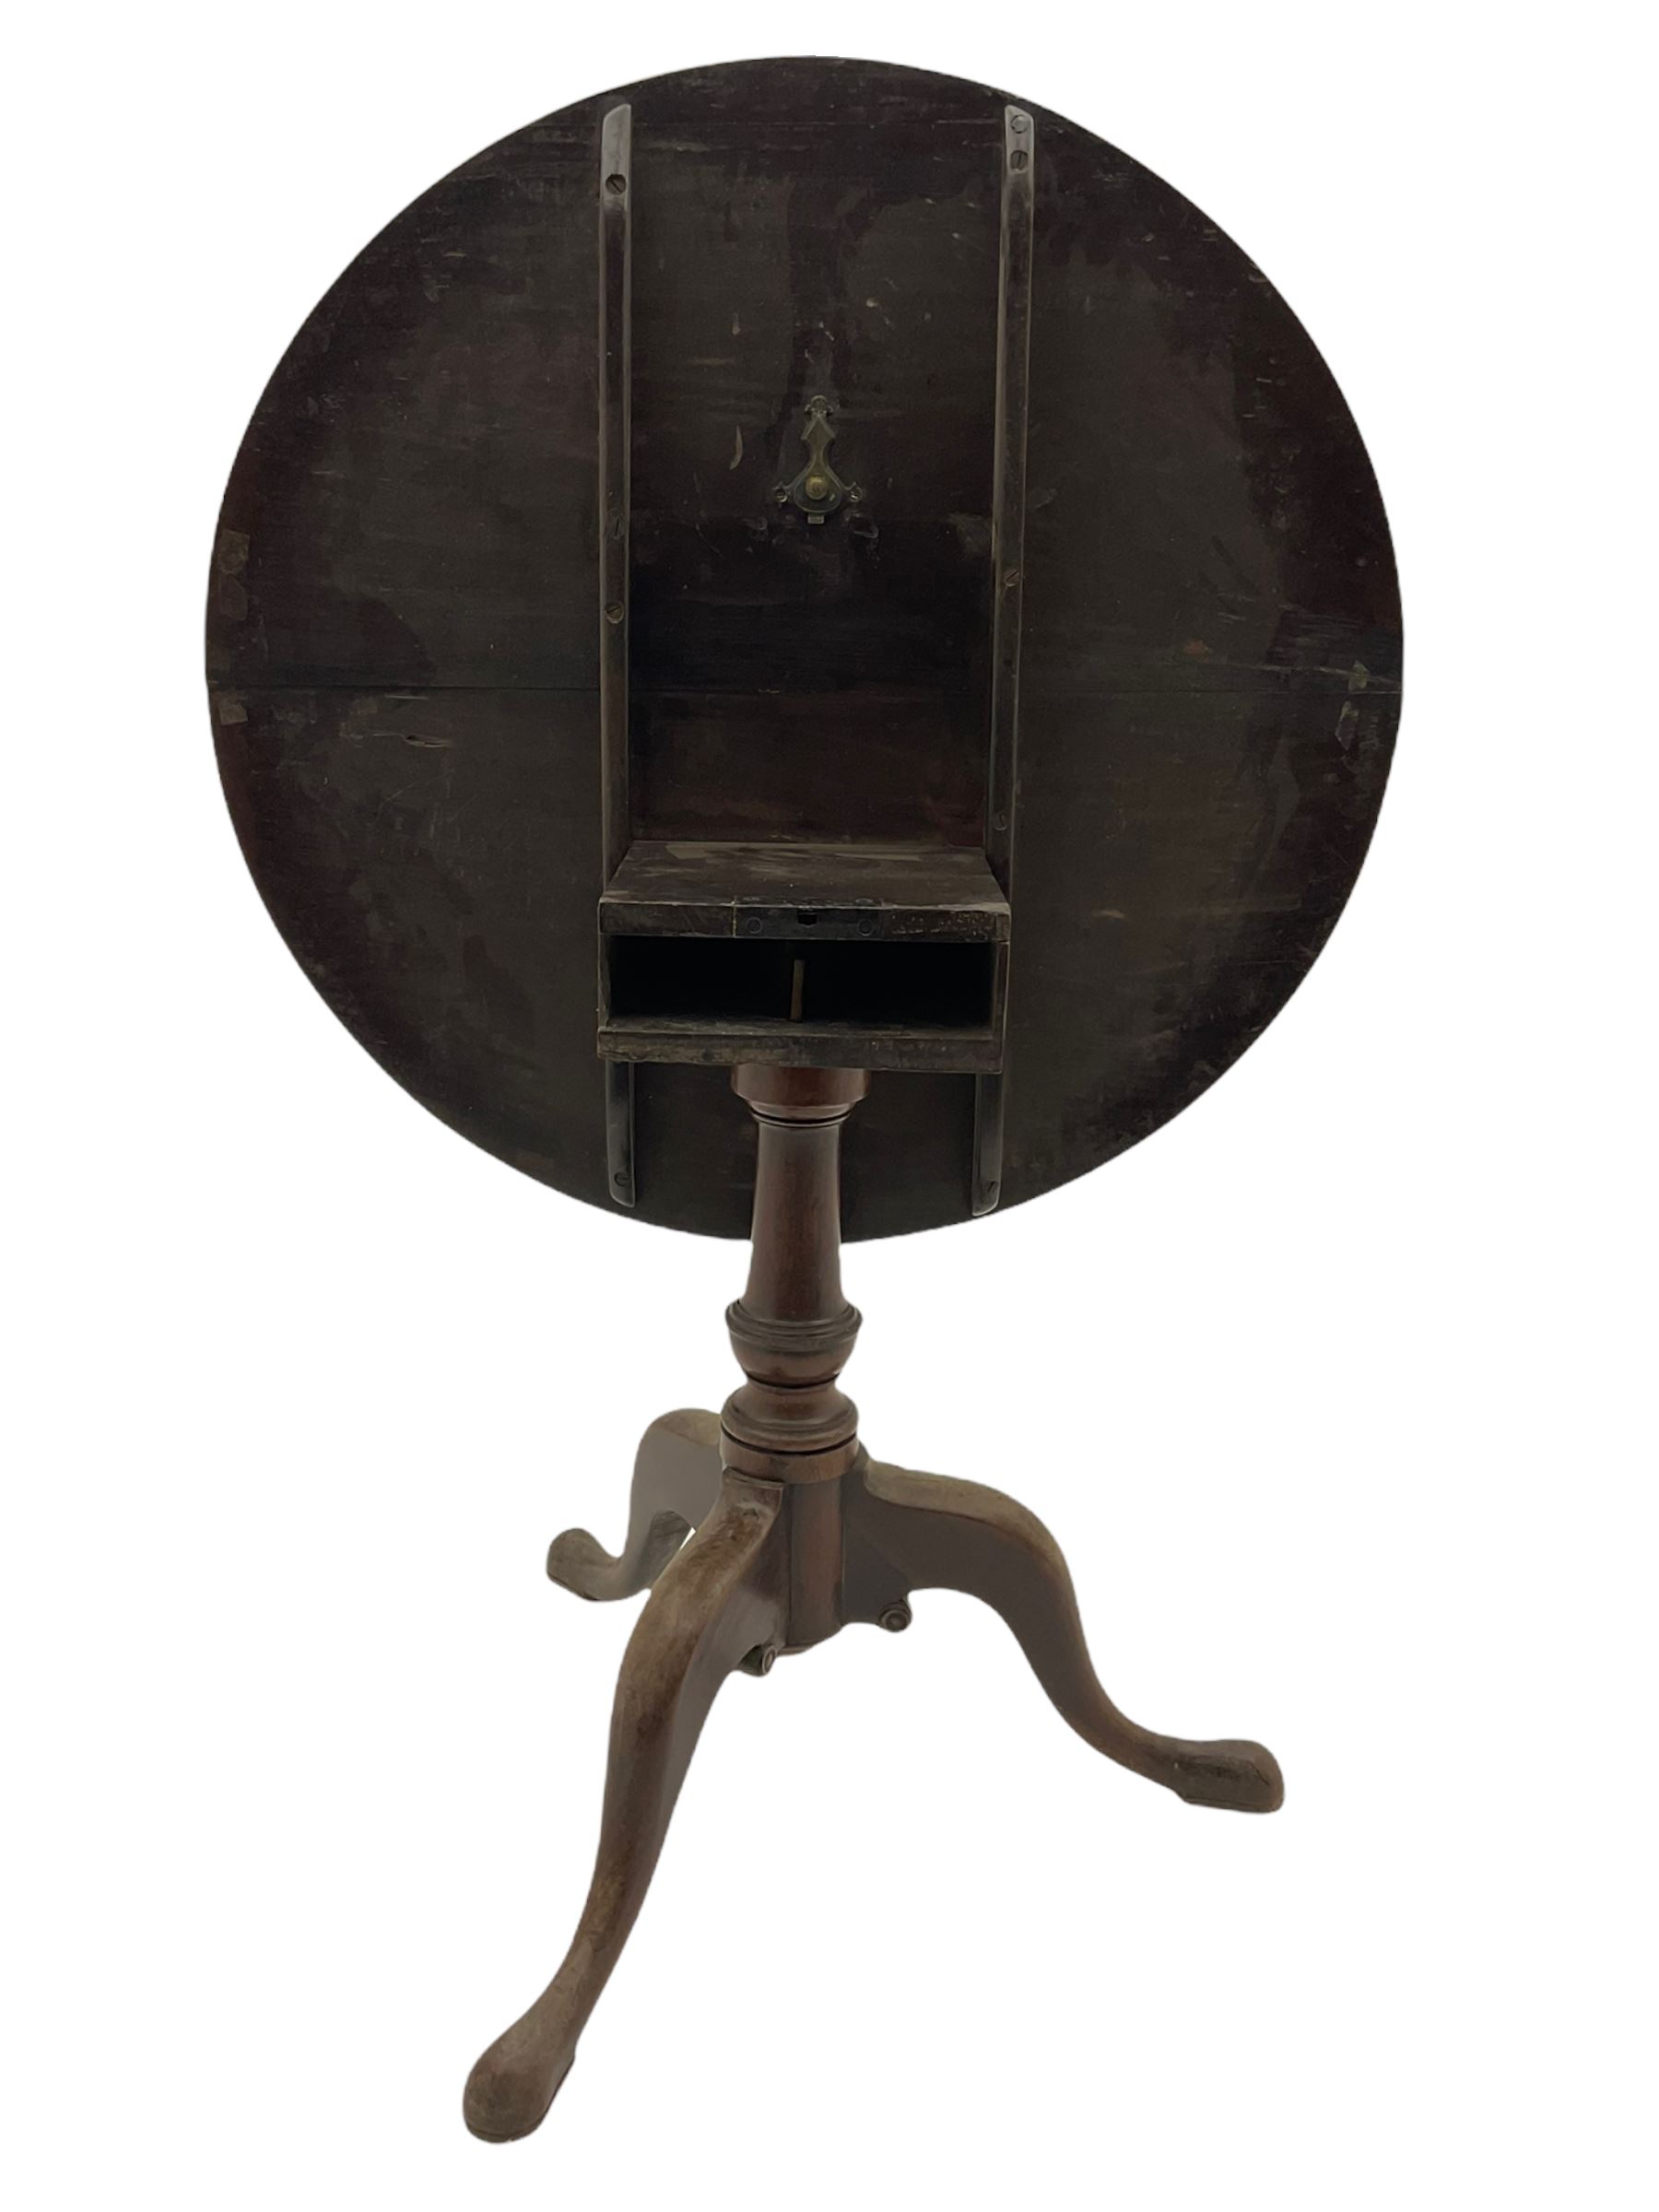 George III mahogany tripod tea table - Image 4 of 5